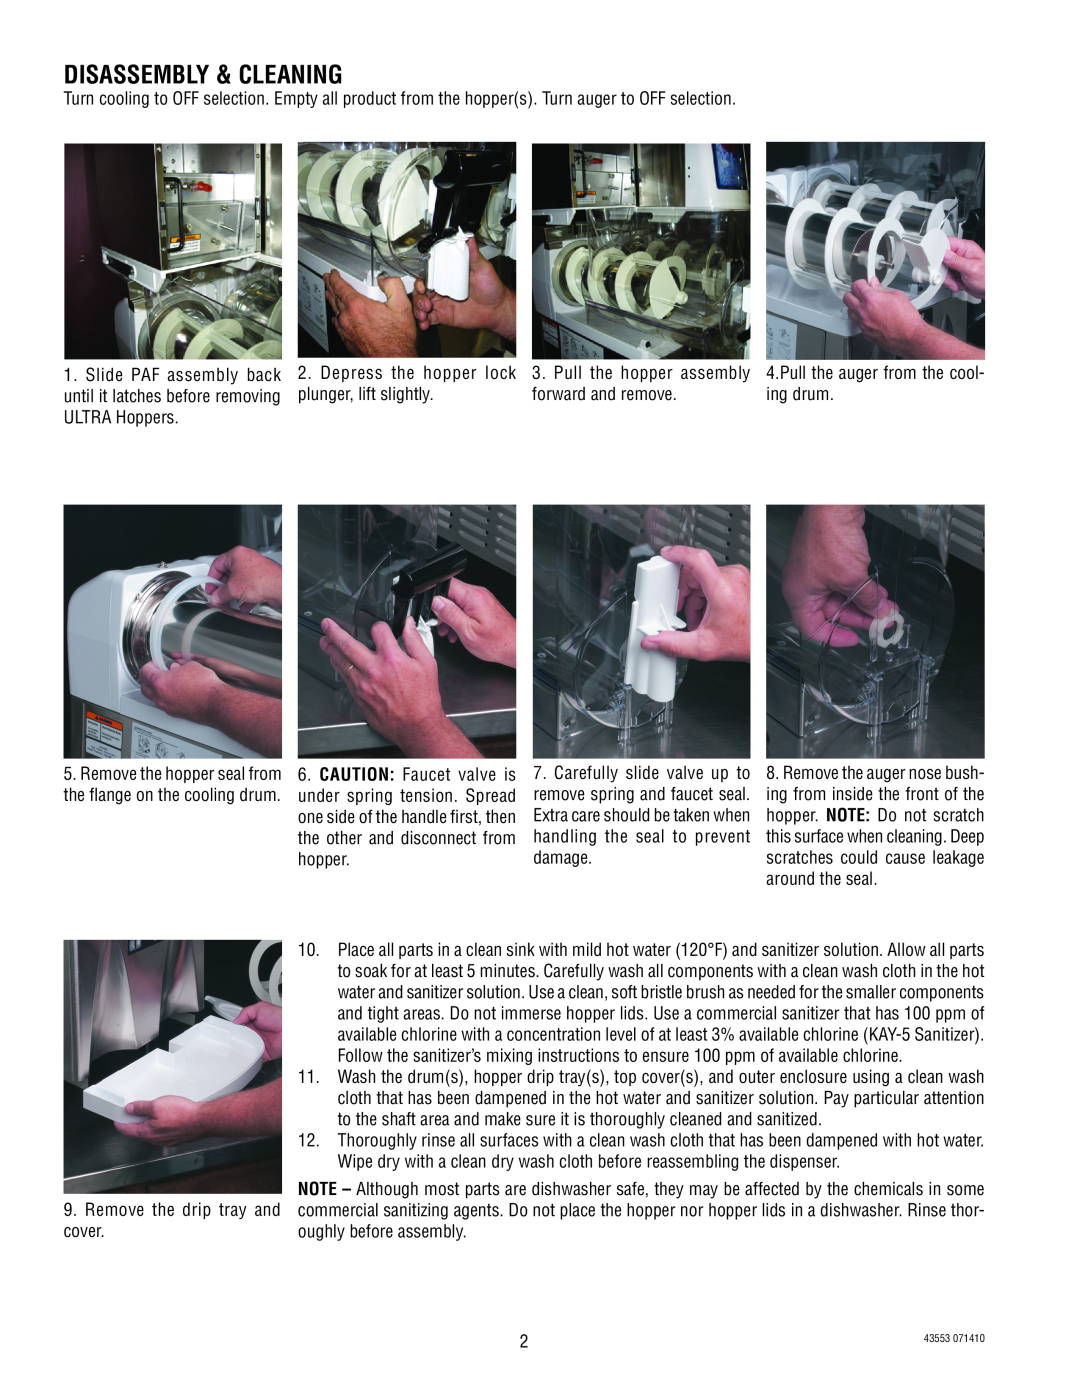 Bunn ULTRA-2 PAFA manual Disassembly & Cleaning 